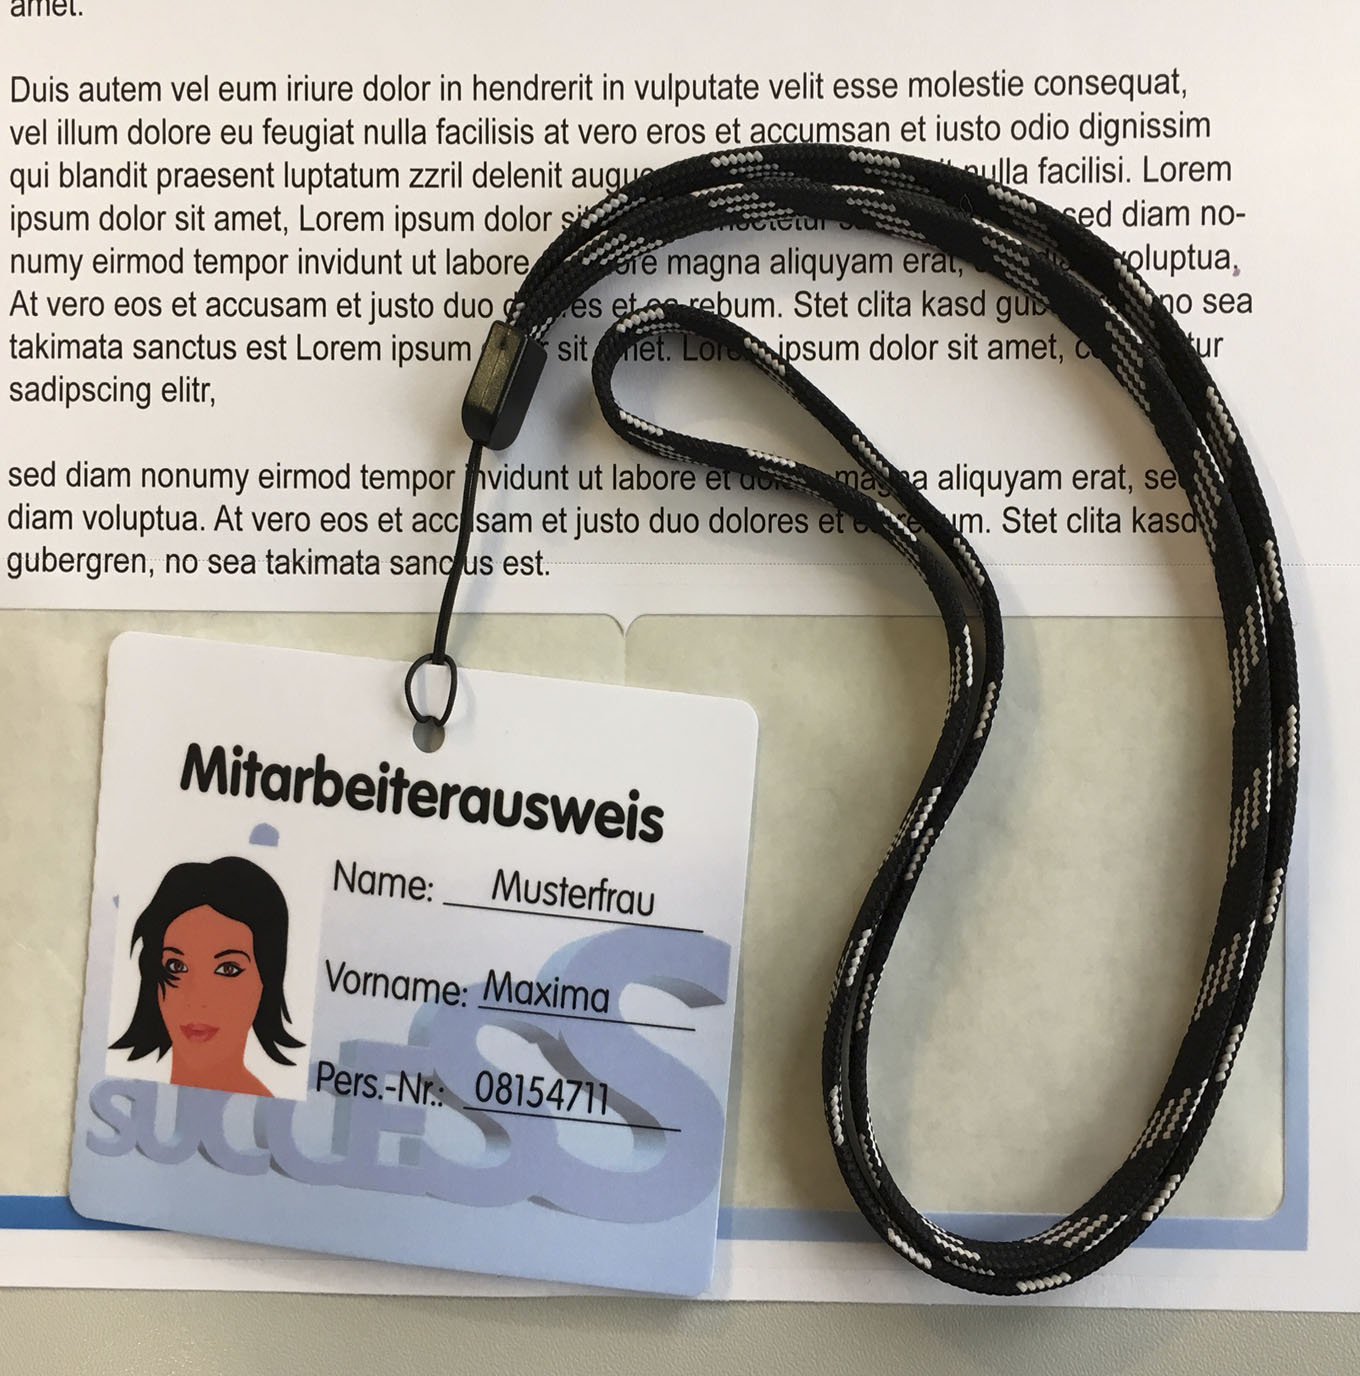 printed visitor pass